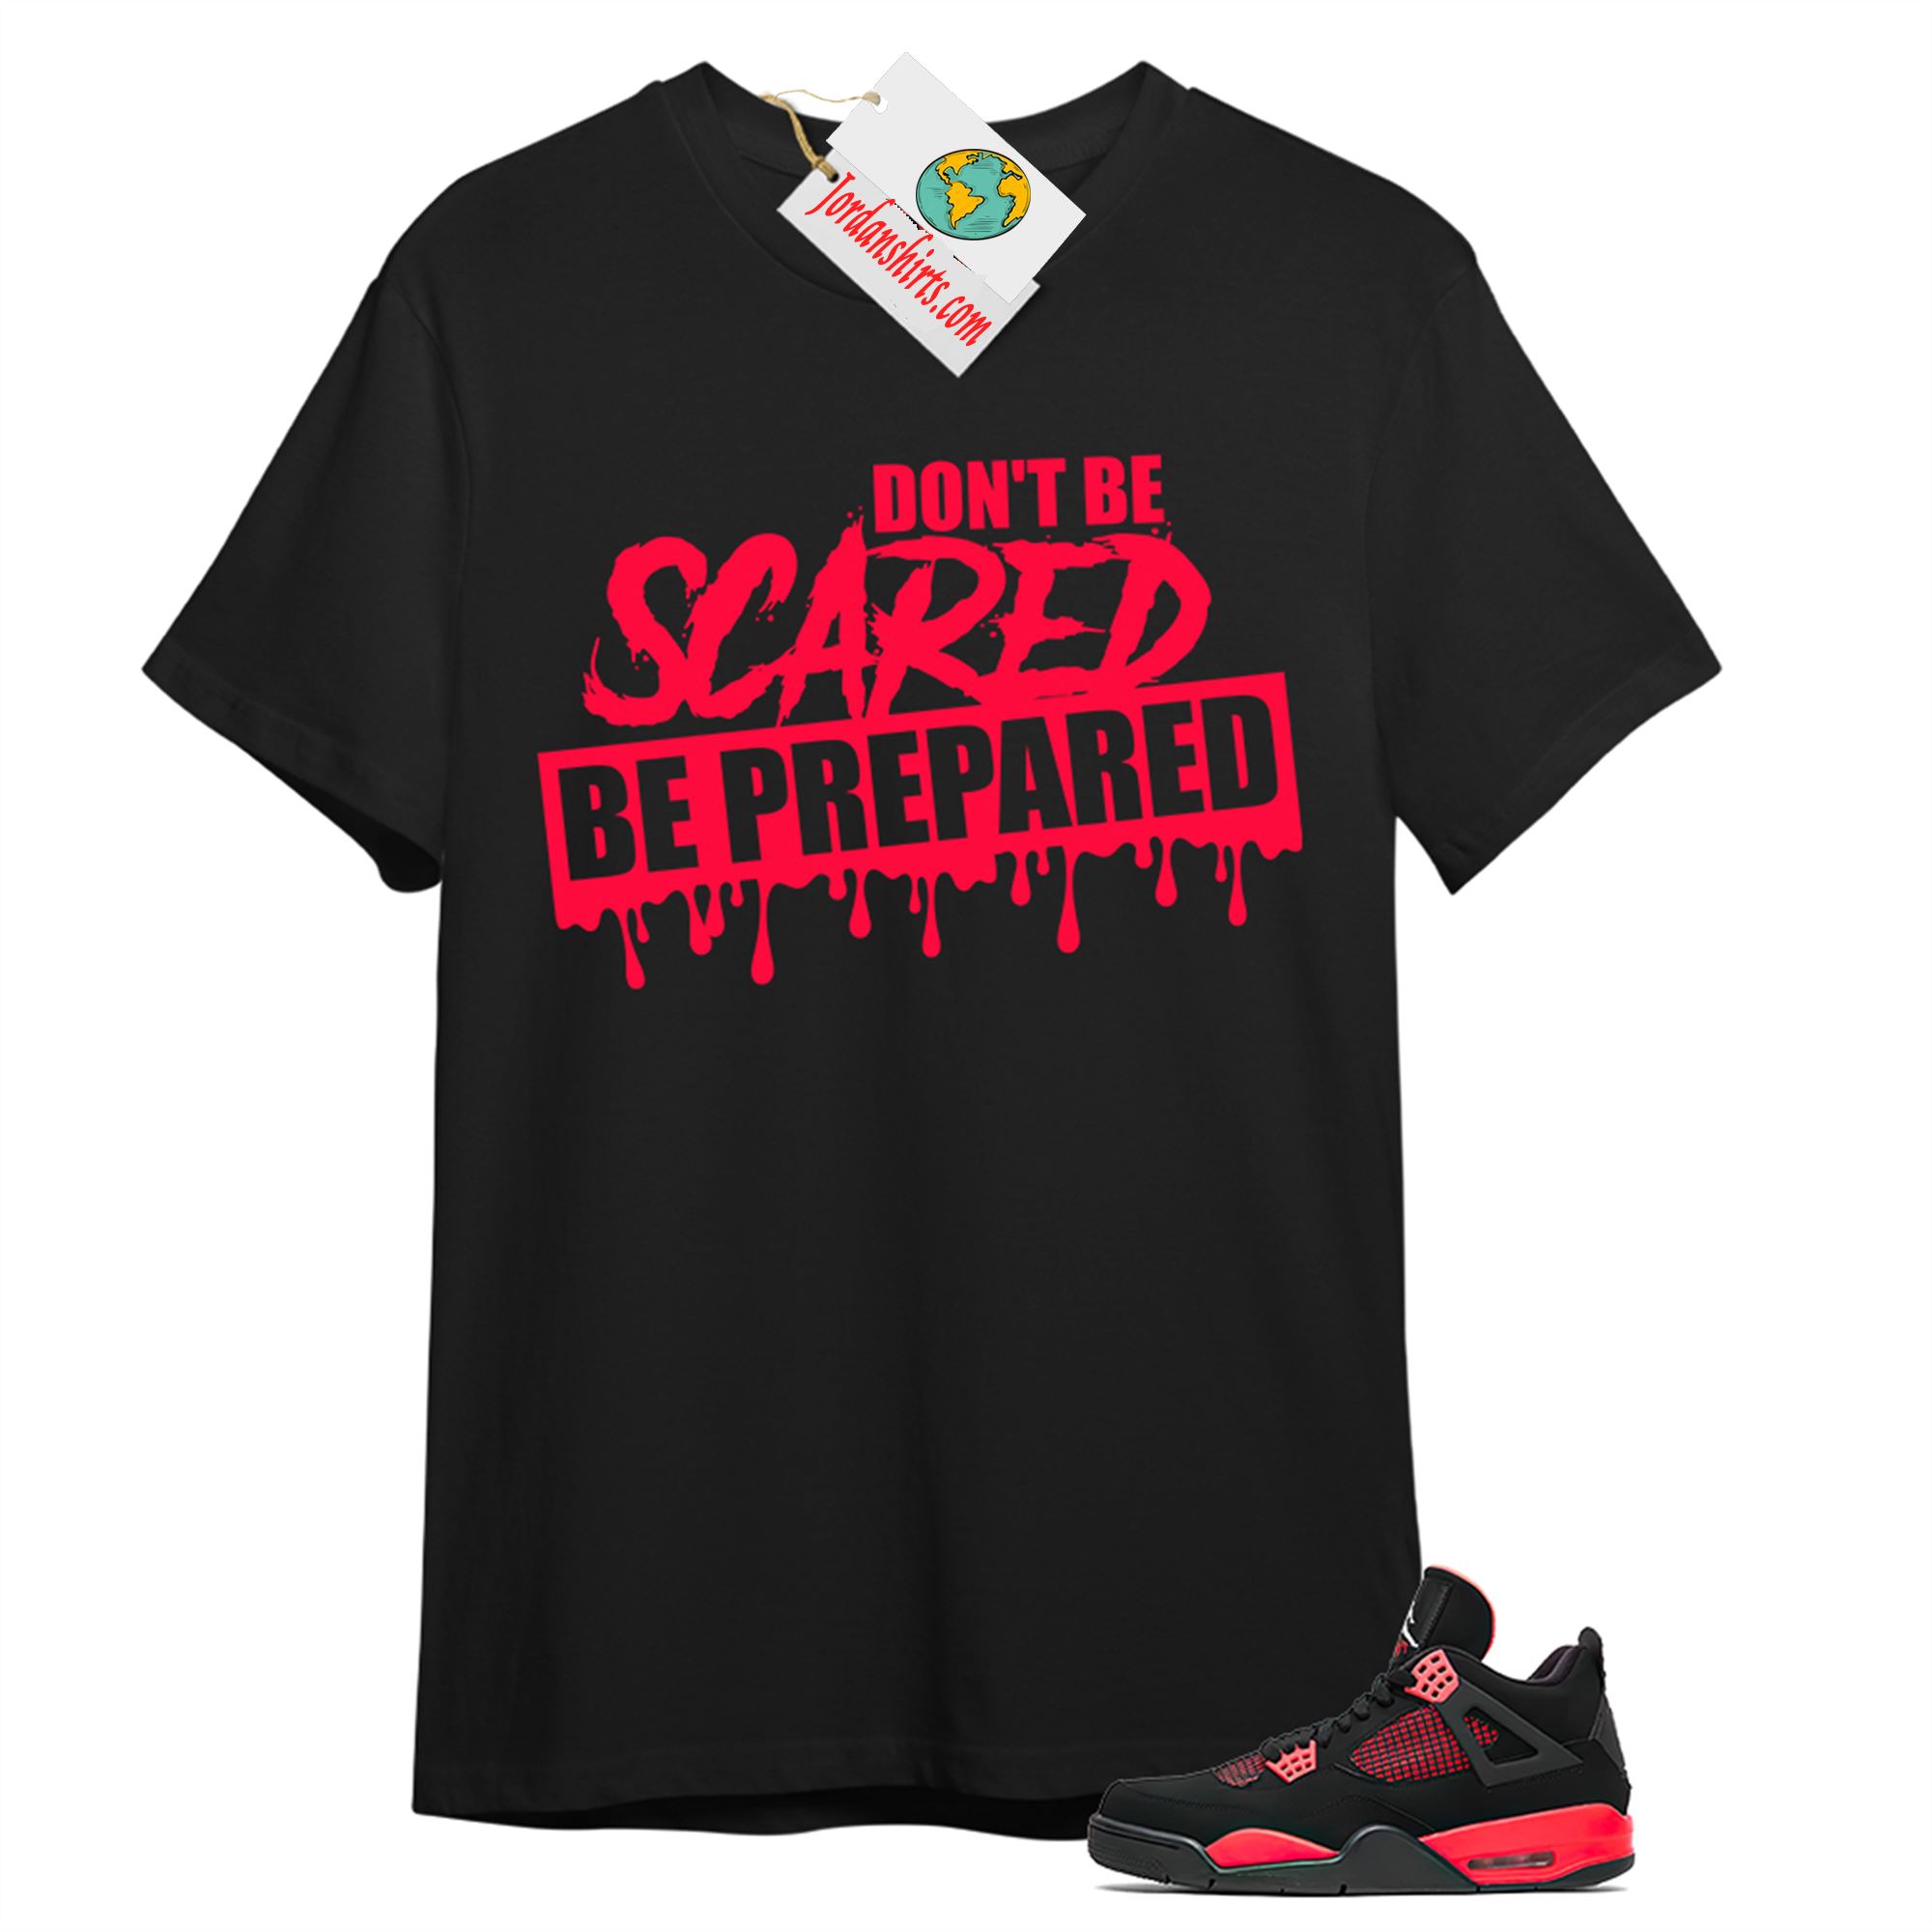 Jordan 4 Shirt, Dont Be Scared Be Prepared Black T-shirt Air Jordan 4 Red Thunder 4s Full Size Up To 5xl